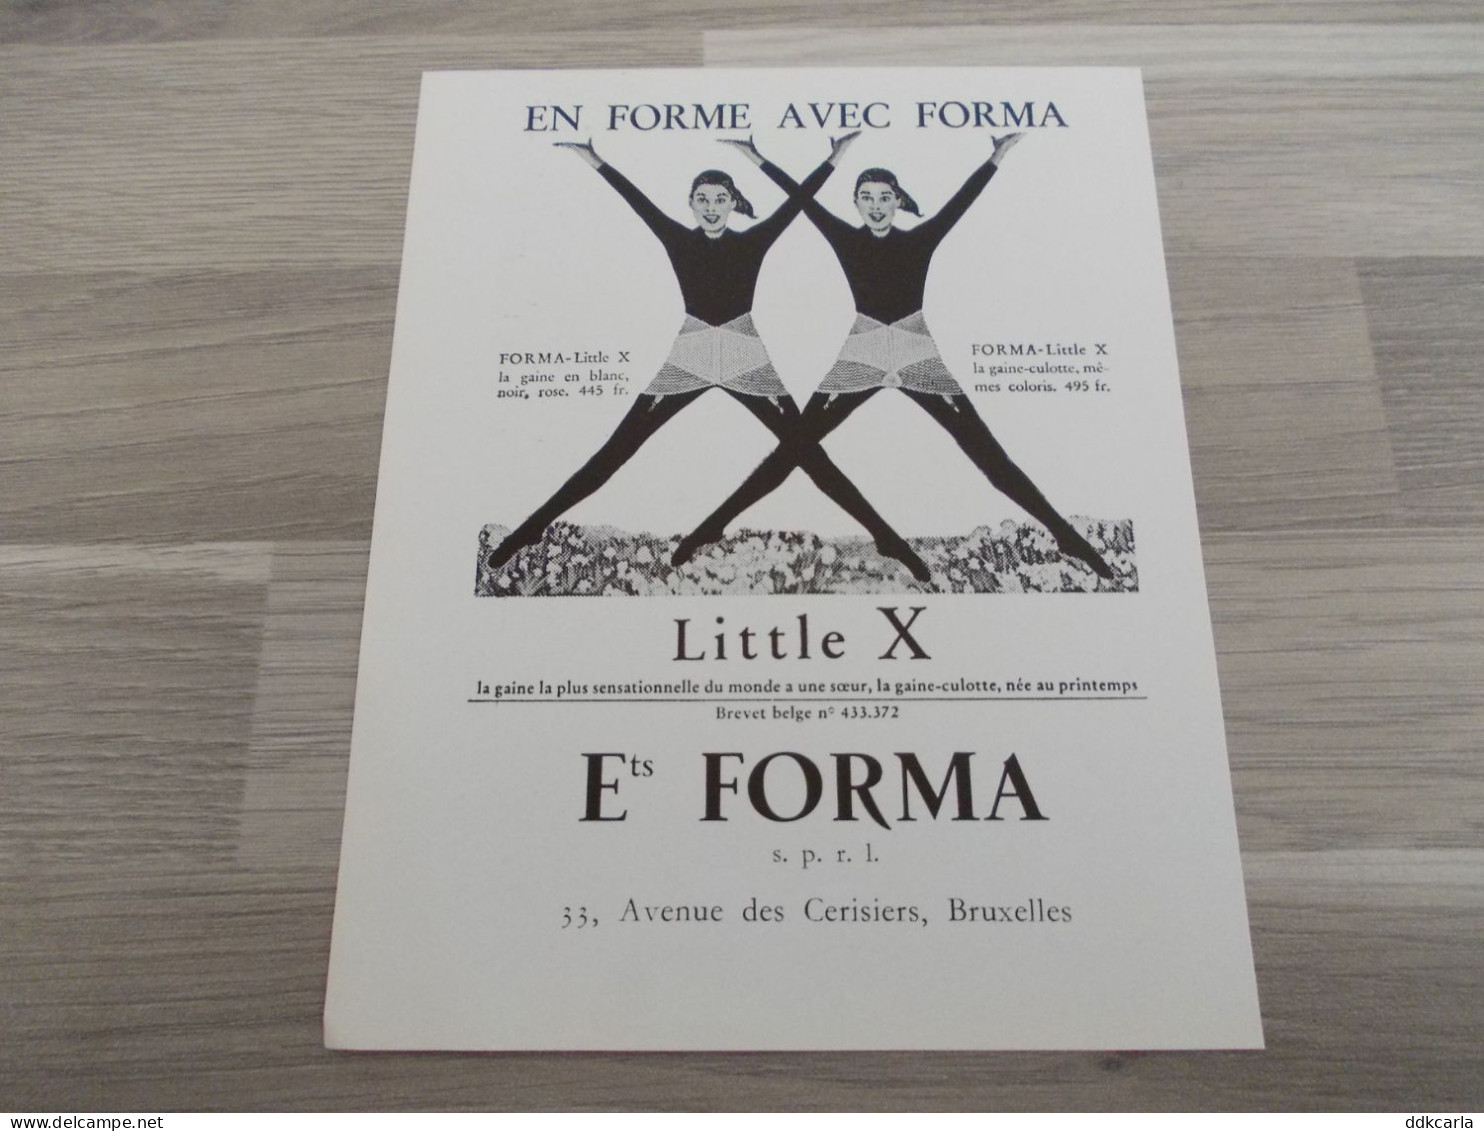 Reclame Advertentie Uit Oud Tijdschrift 1957 - En Forme Avec FORMA Gaines - Little X Gaine Et Gaine-culotte - Advertising